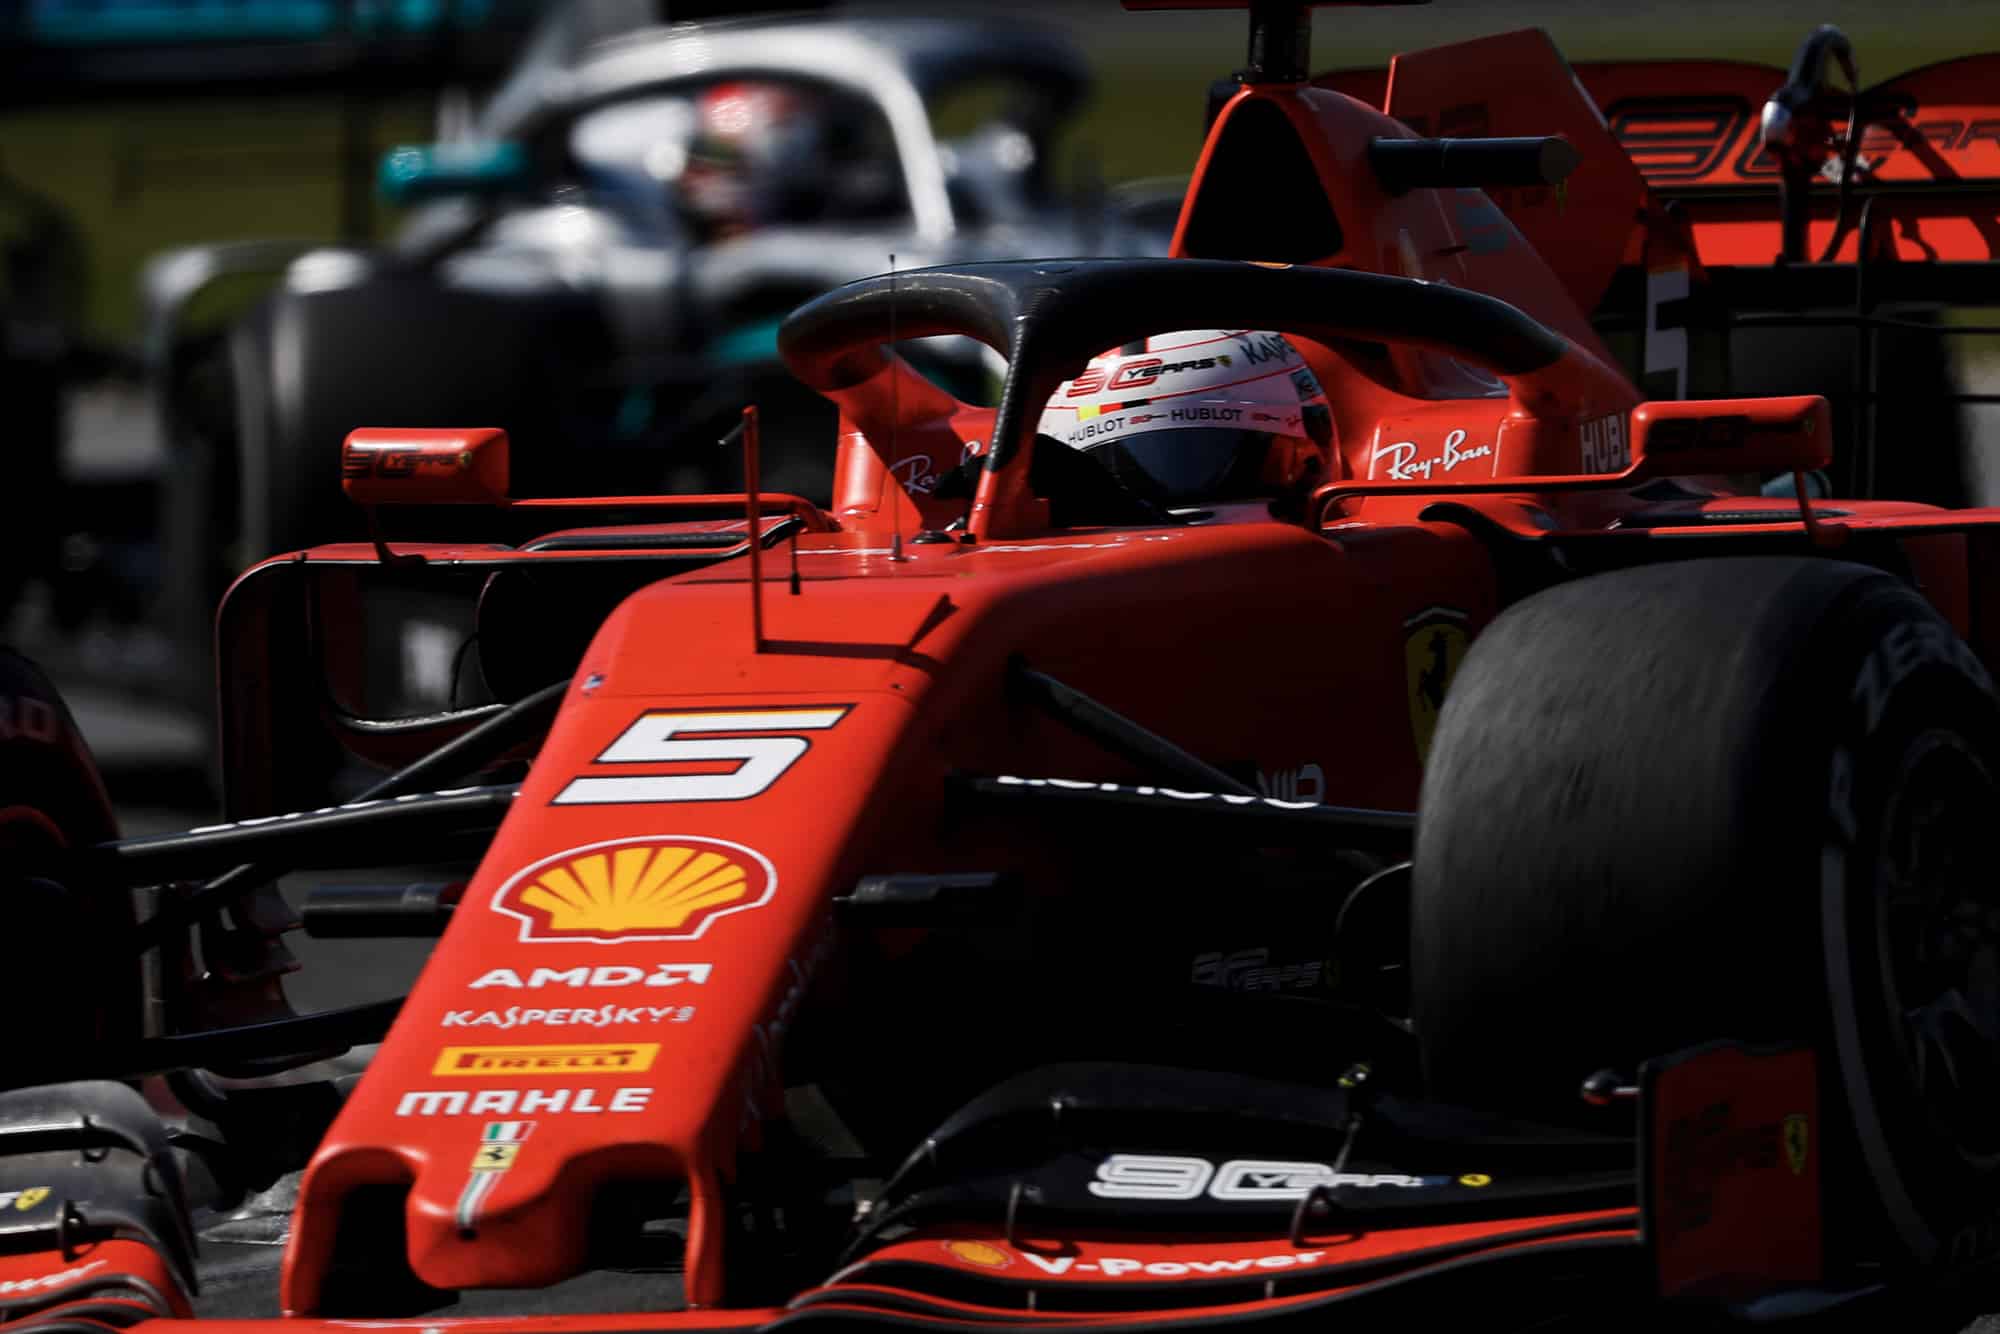 Lewis Hamilton stalks Sebastian Vettel during the 2019 Canadian Grand Prix